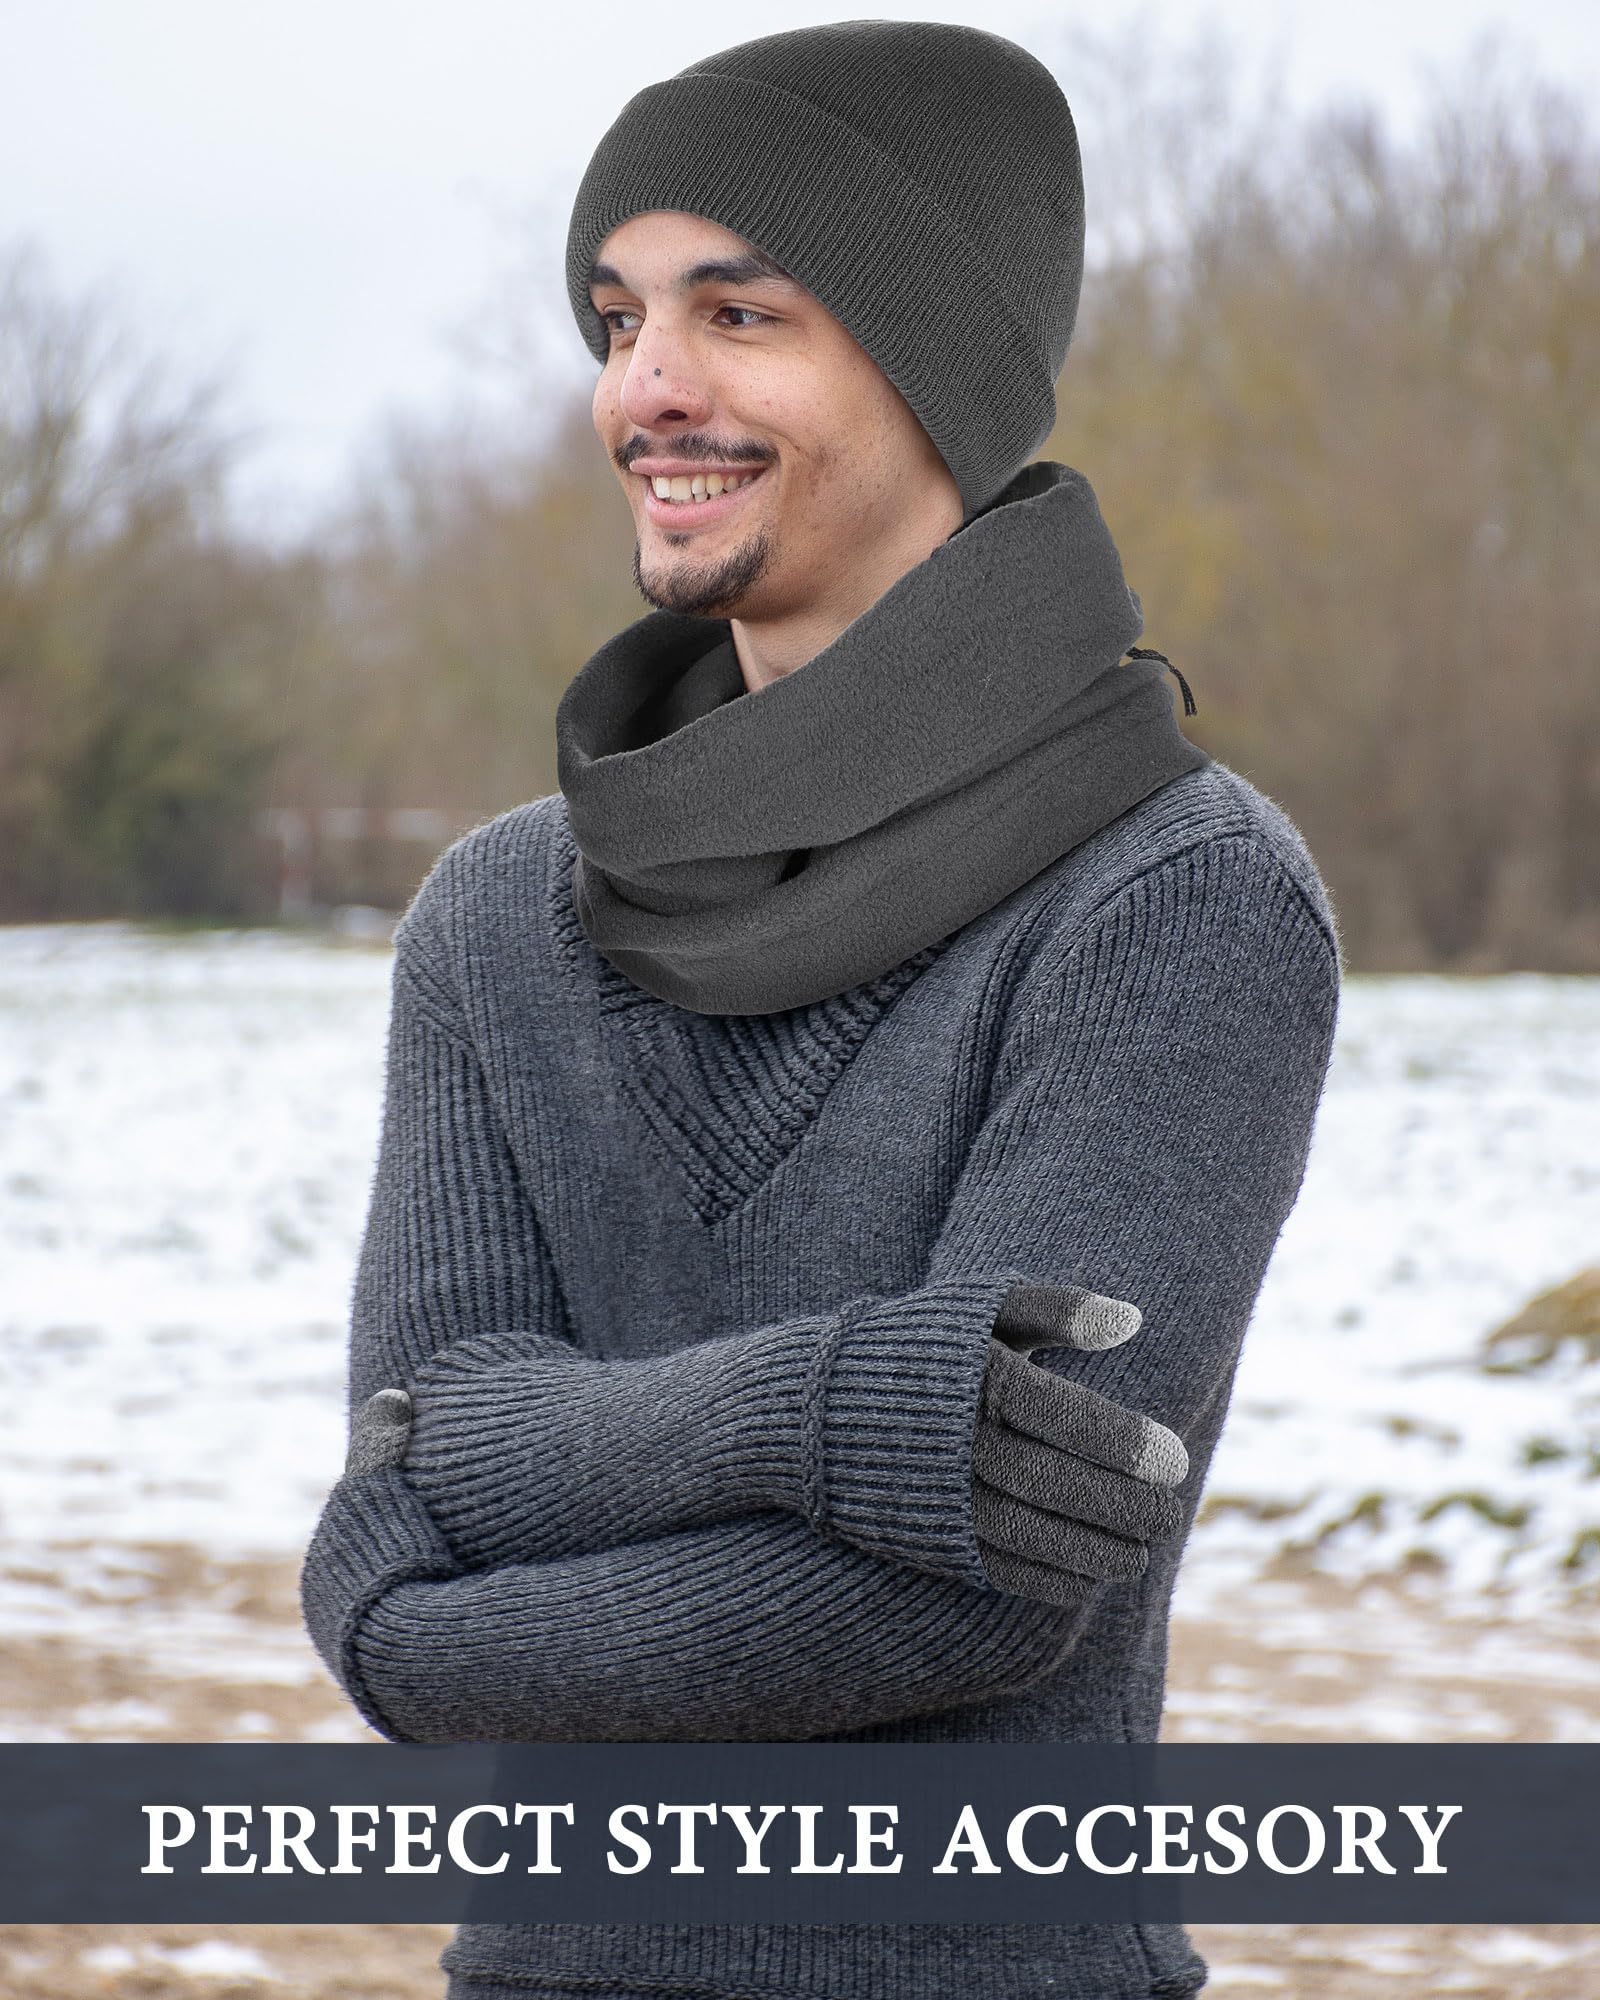 Liitrsh 12 Pcs Winter Beanie Hat Scarf Touchscreen Gloves Set Skull Cap Knit Fleece Neck Warmer Touch Screen Mittens for Women Men (Classic Colors)